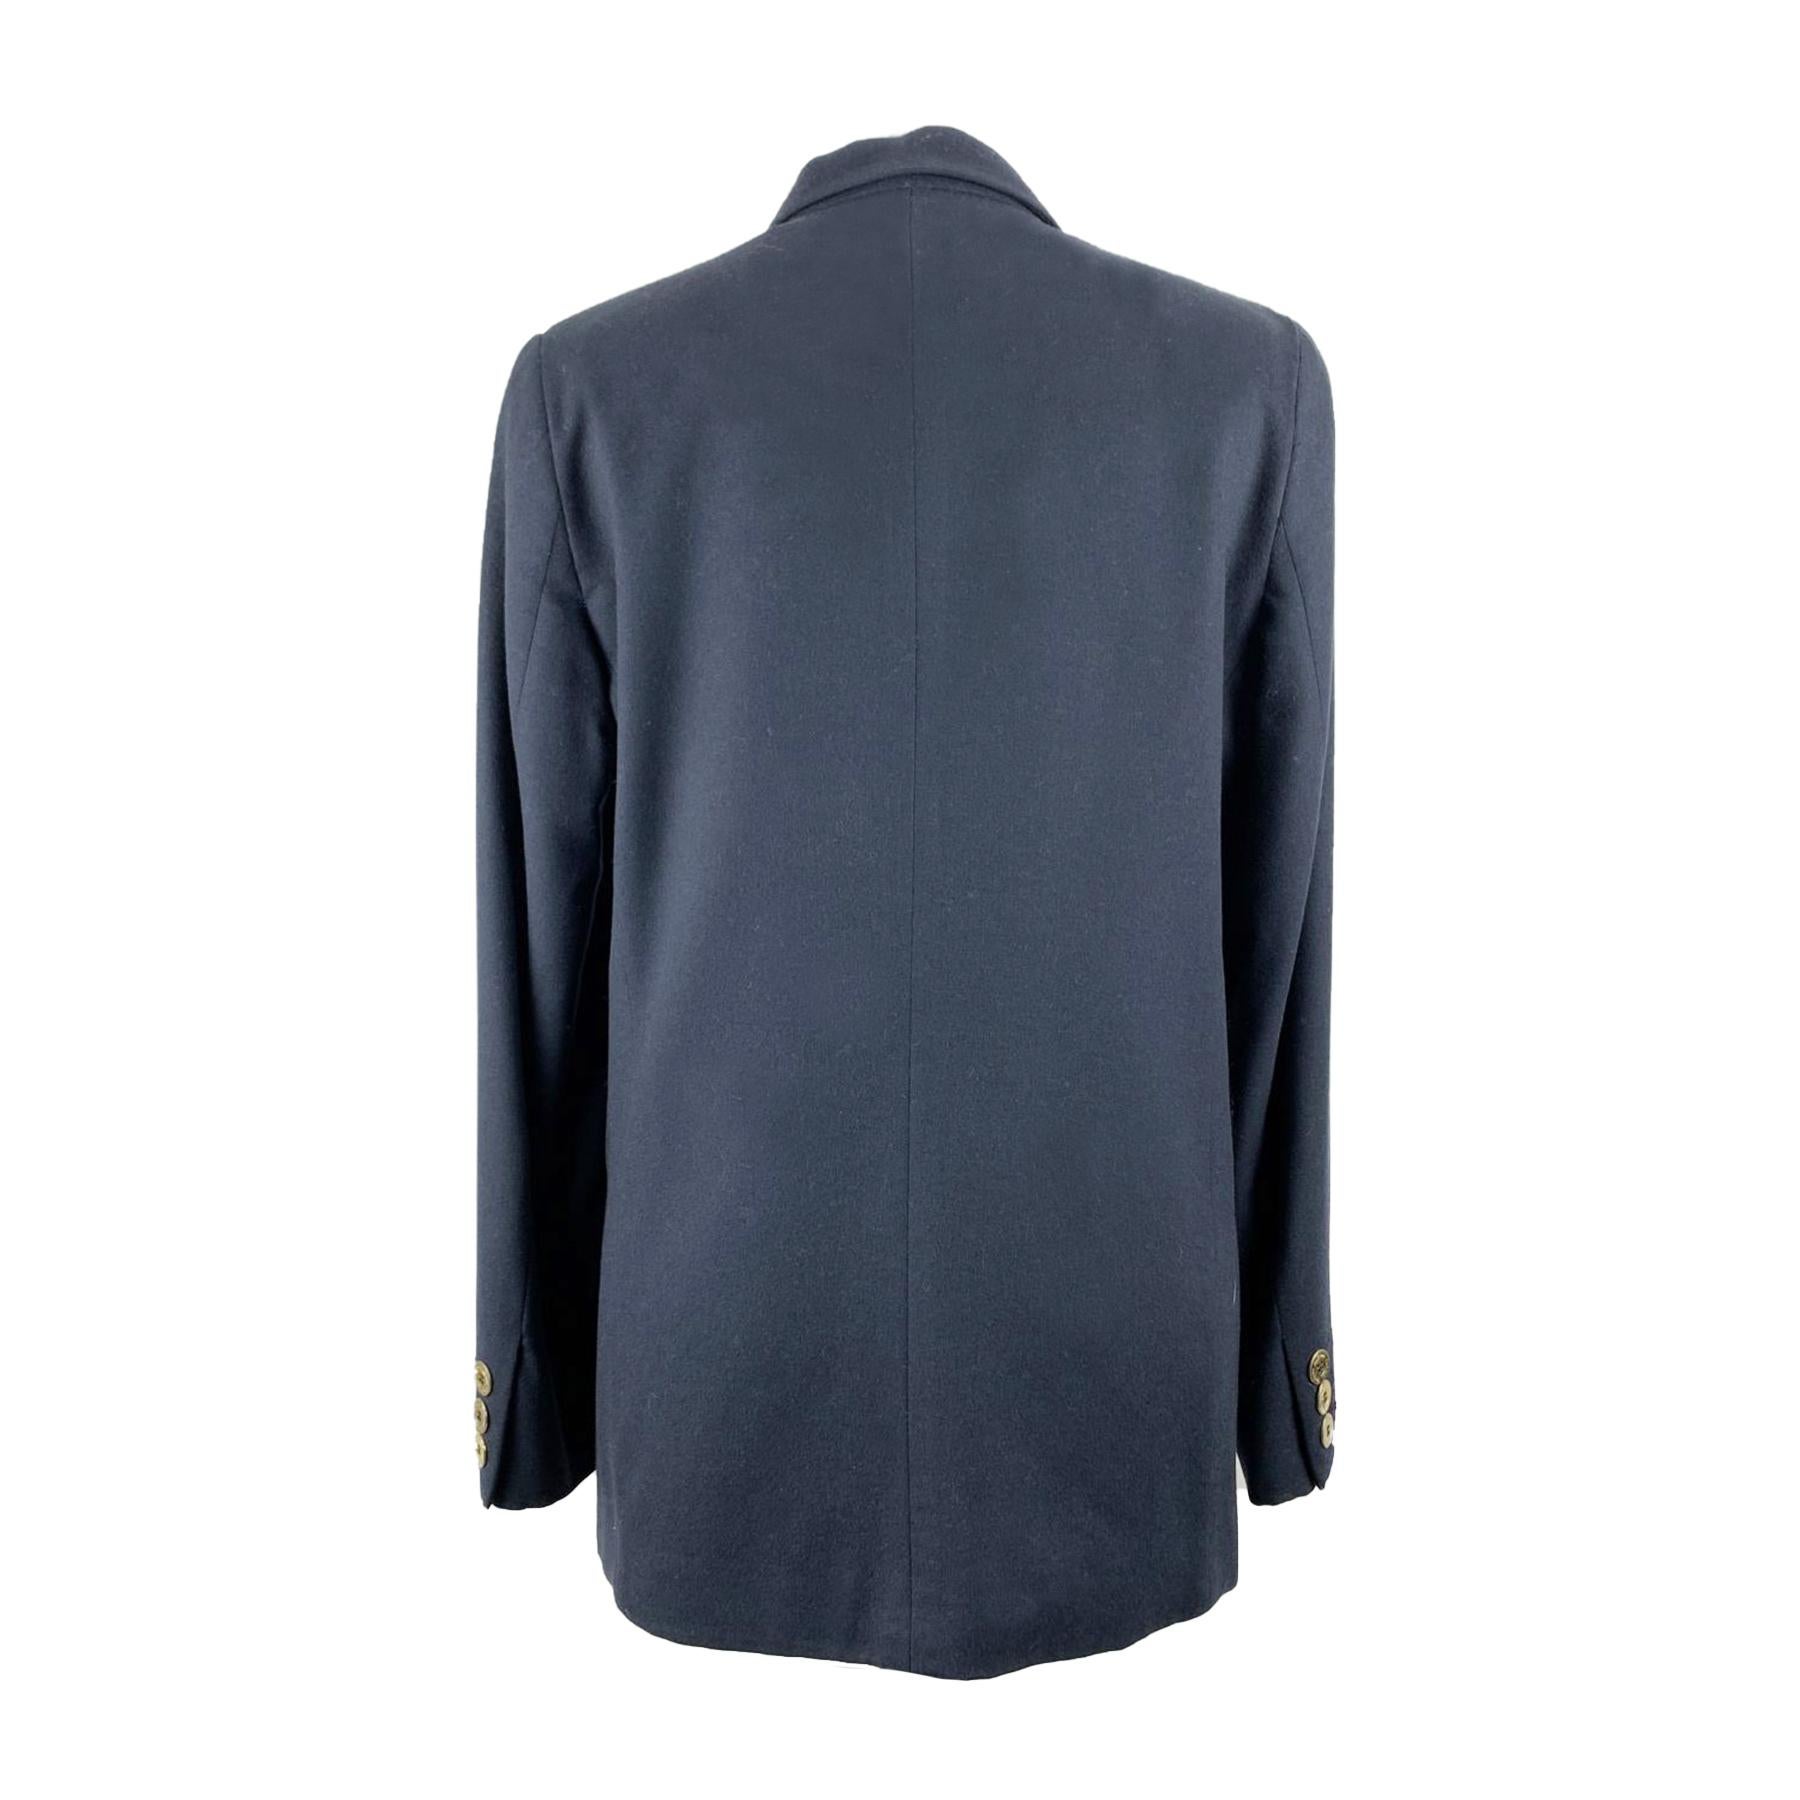 Black Les Copains Vintage Navy Blue Cupro Blazer Jacket Size 42 IT